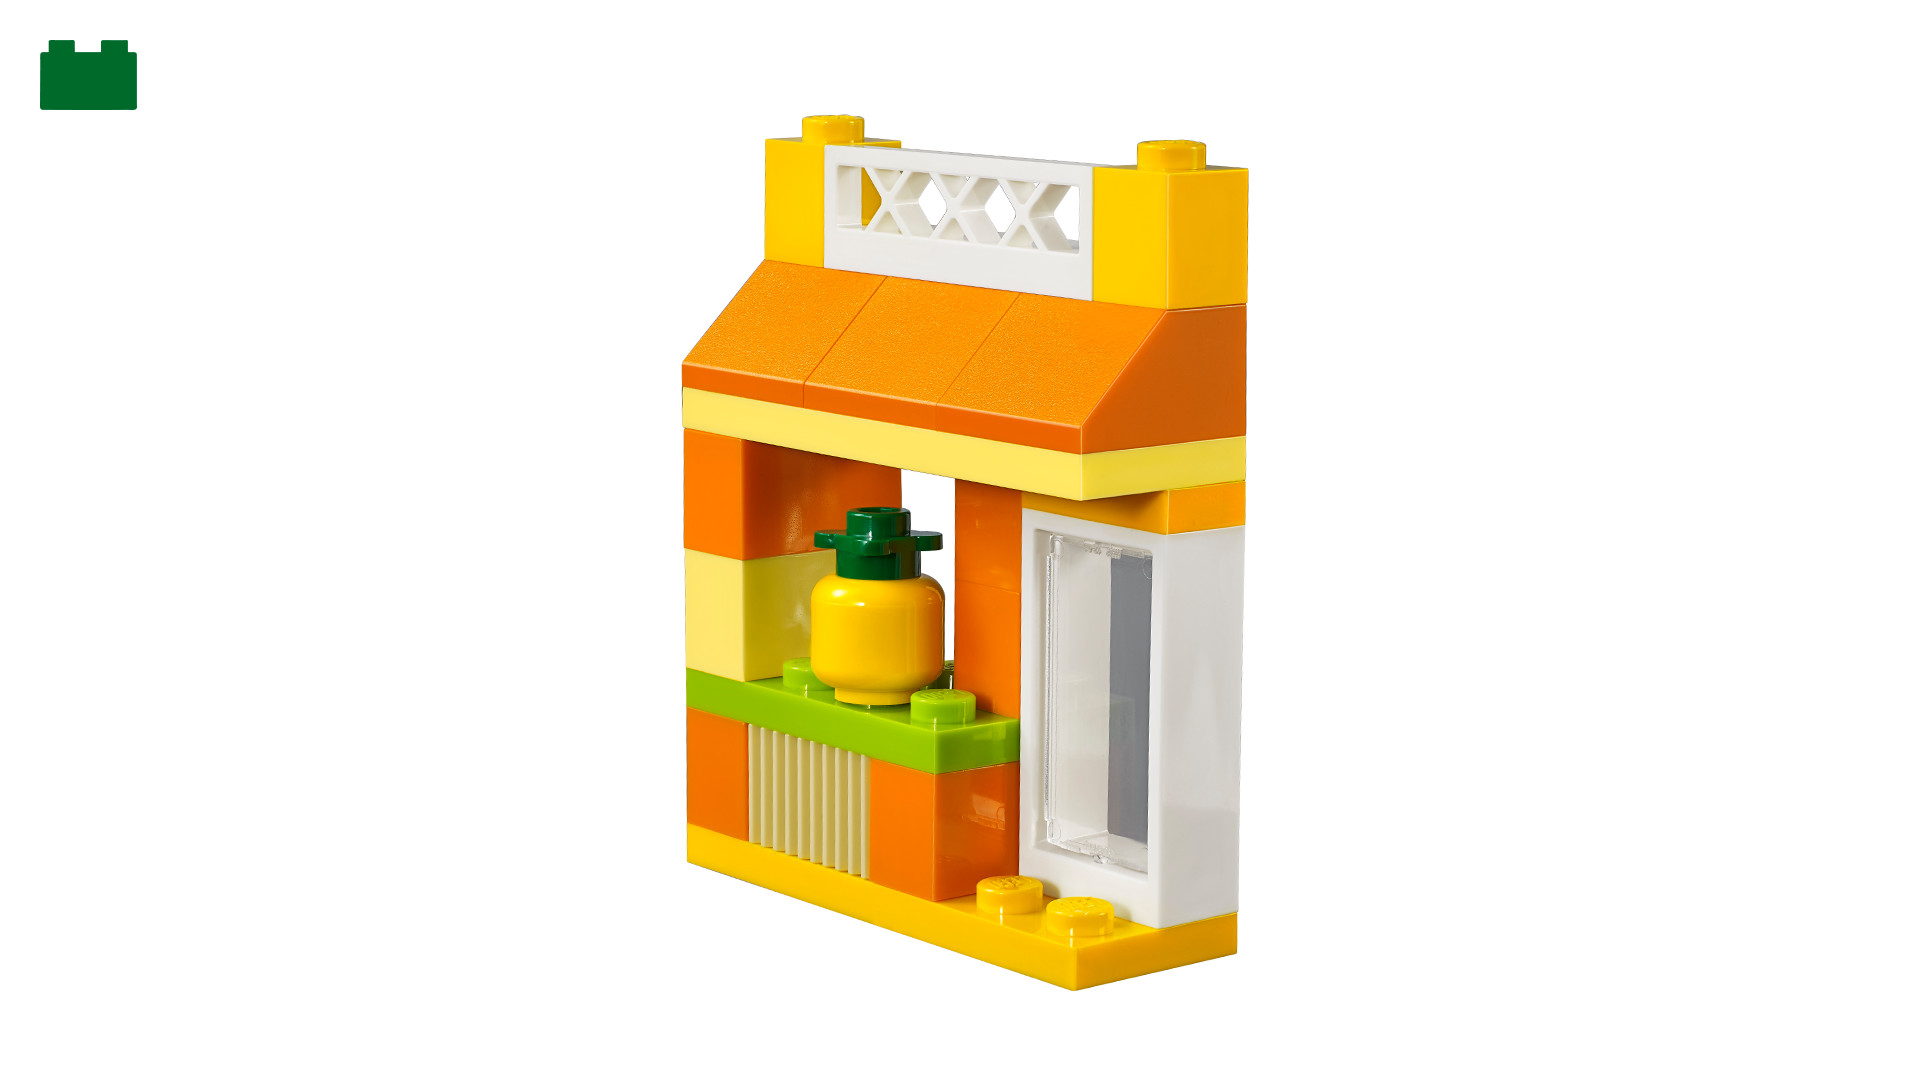 lego classic yellow box